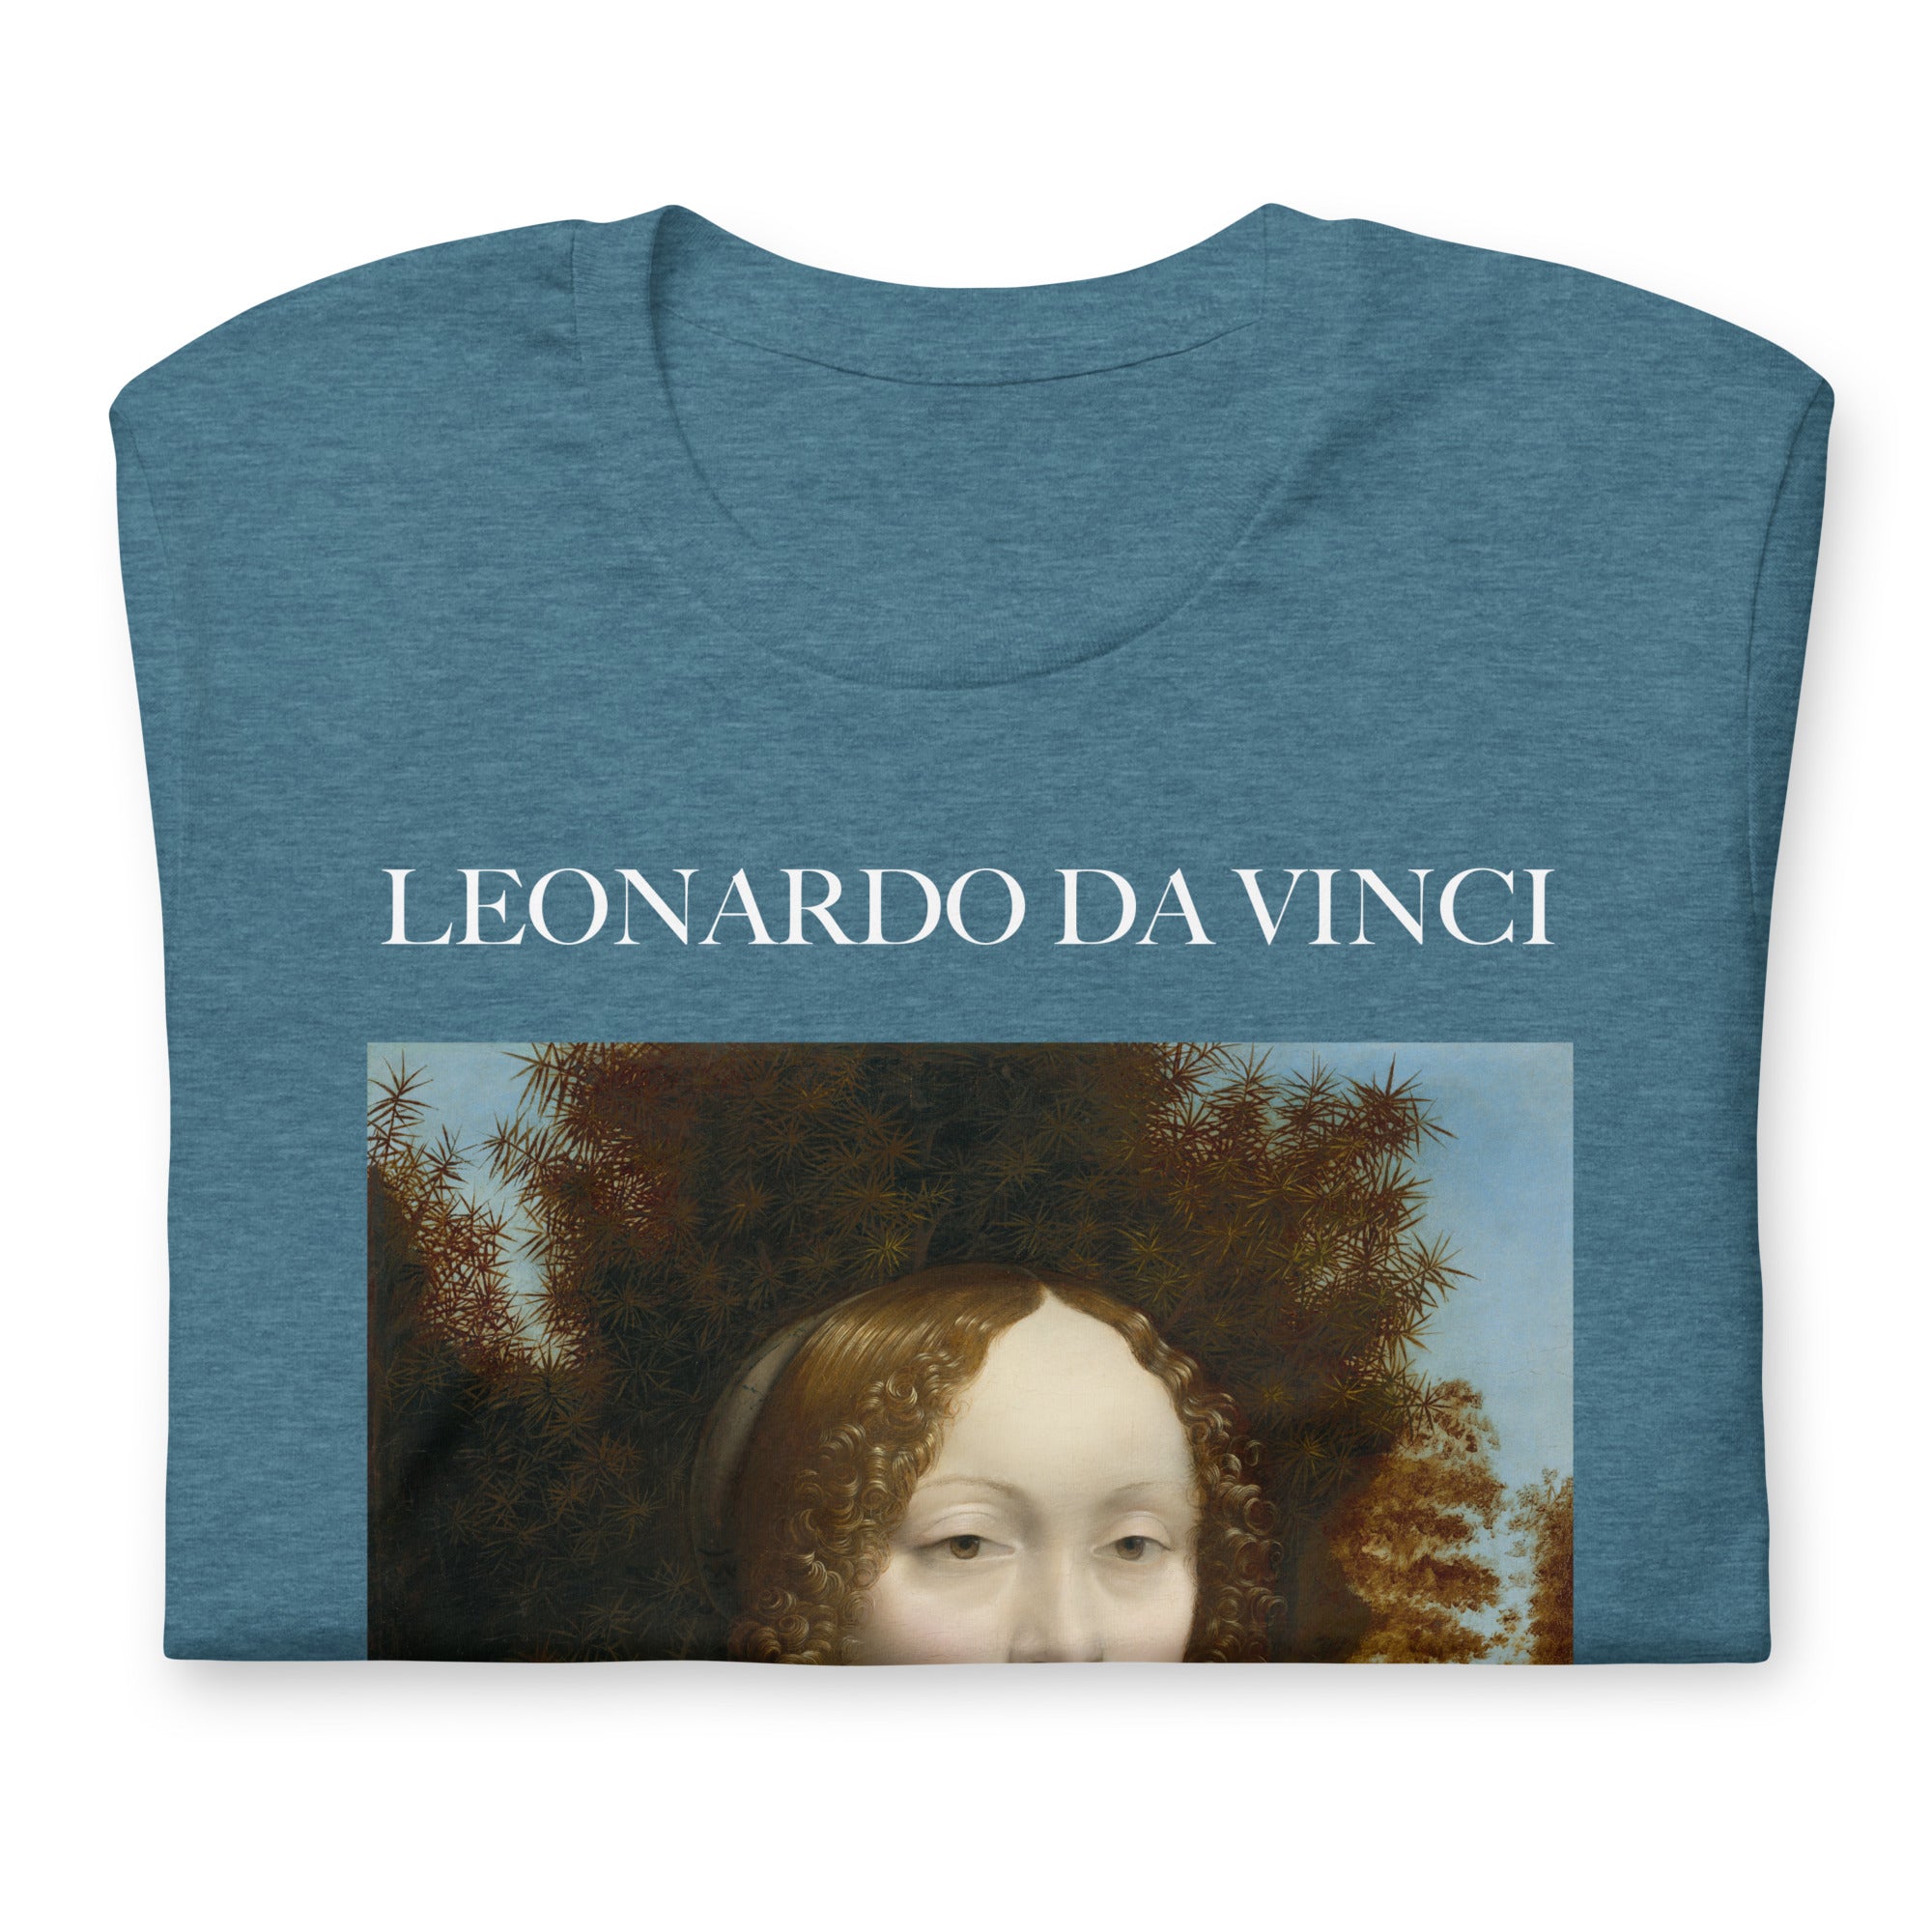 Leonardo da Vinci 'Ginevra de' Benci' Berühmtes Gemälde T-Shirt | Unisex Klassisches Kunst-T-Shirt